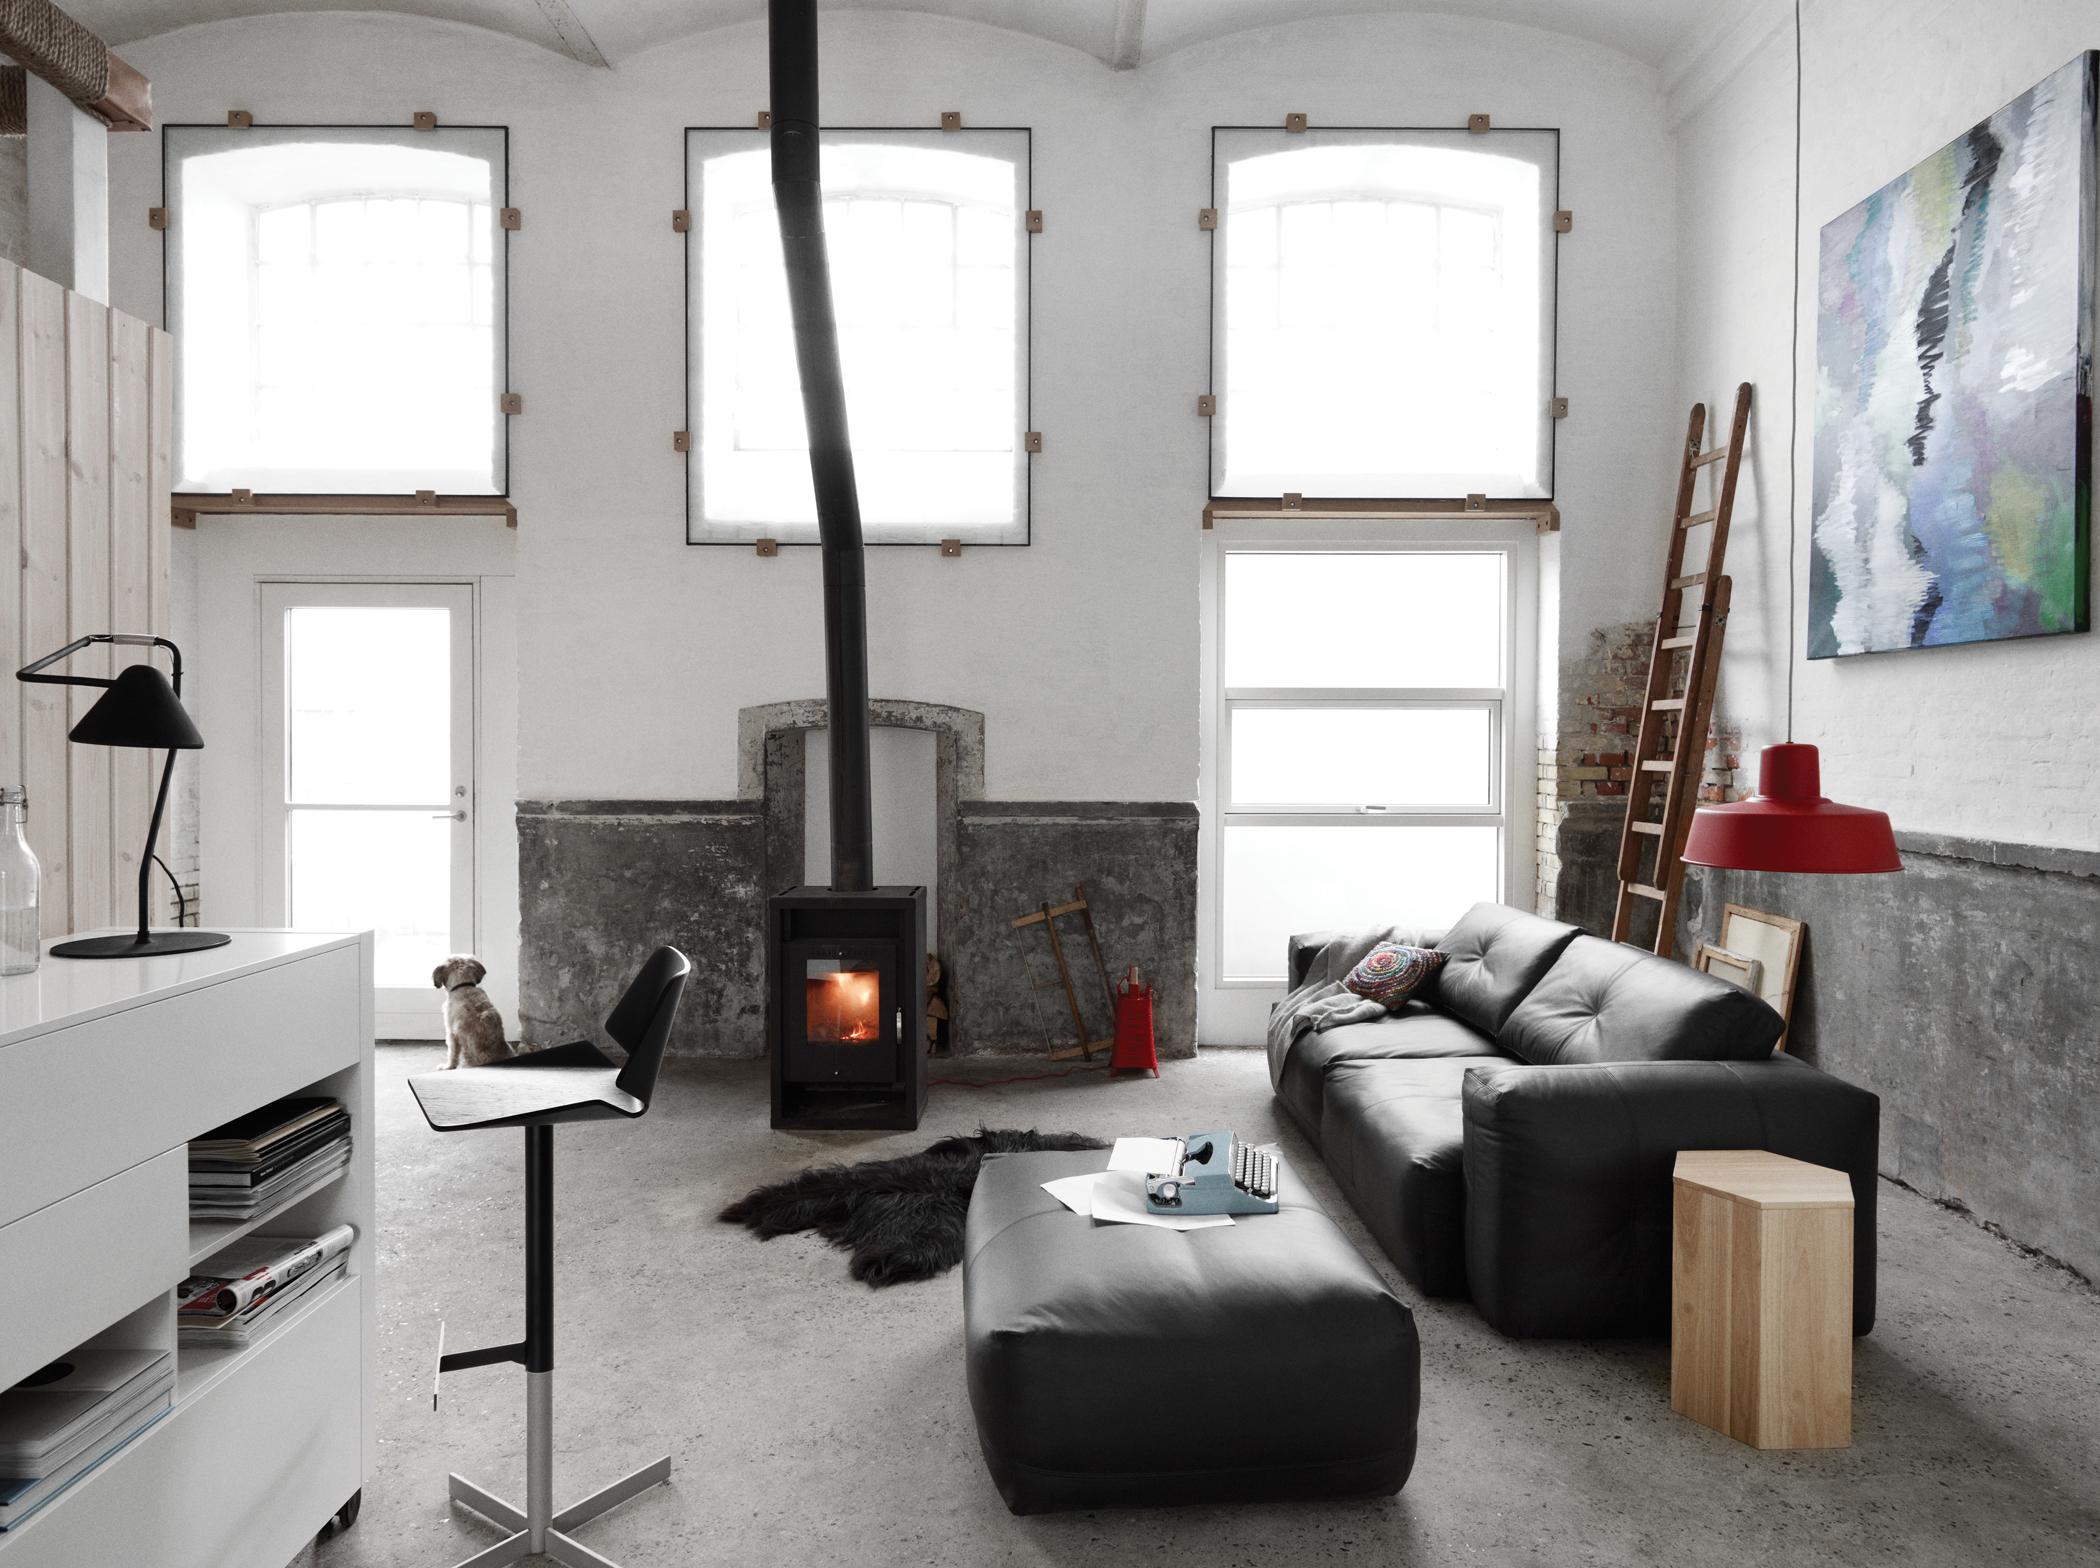 Sofa und Sitzhocker aus schwarzem Leder #barhocker #ledersofa #loft #industriedesign #boconcept ©BoConcept